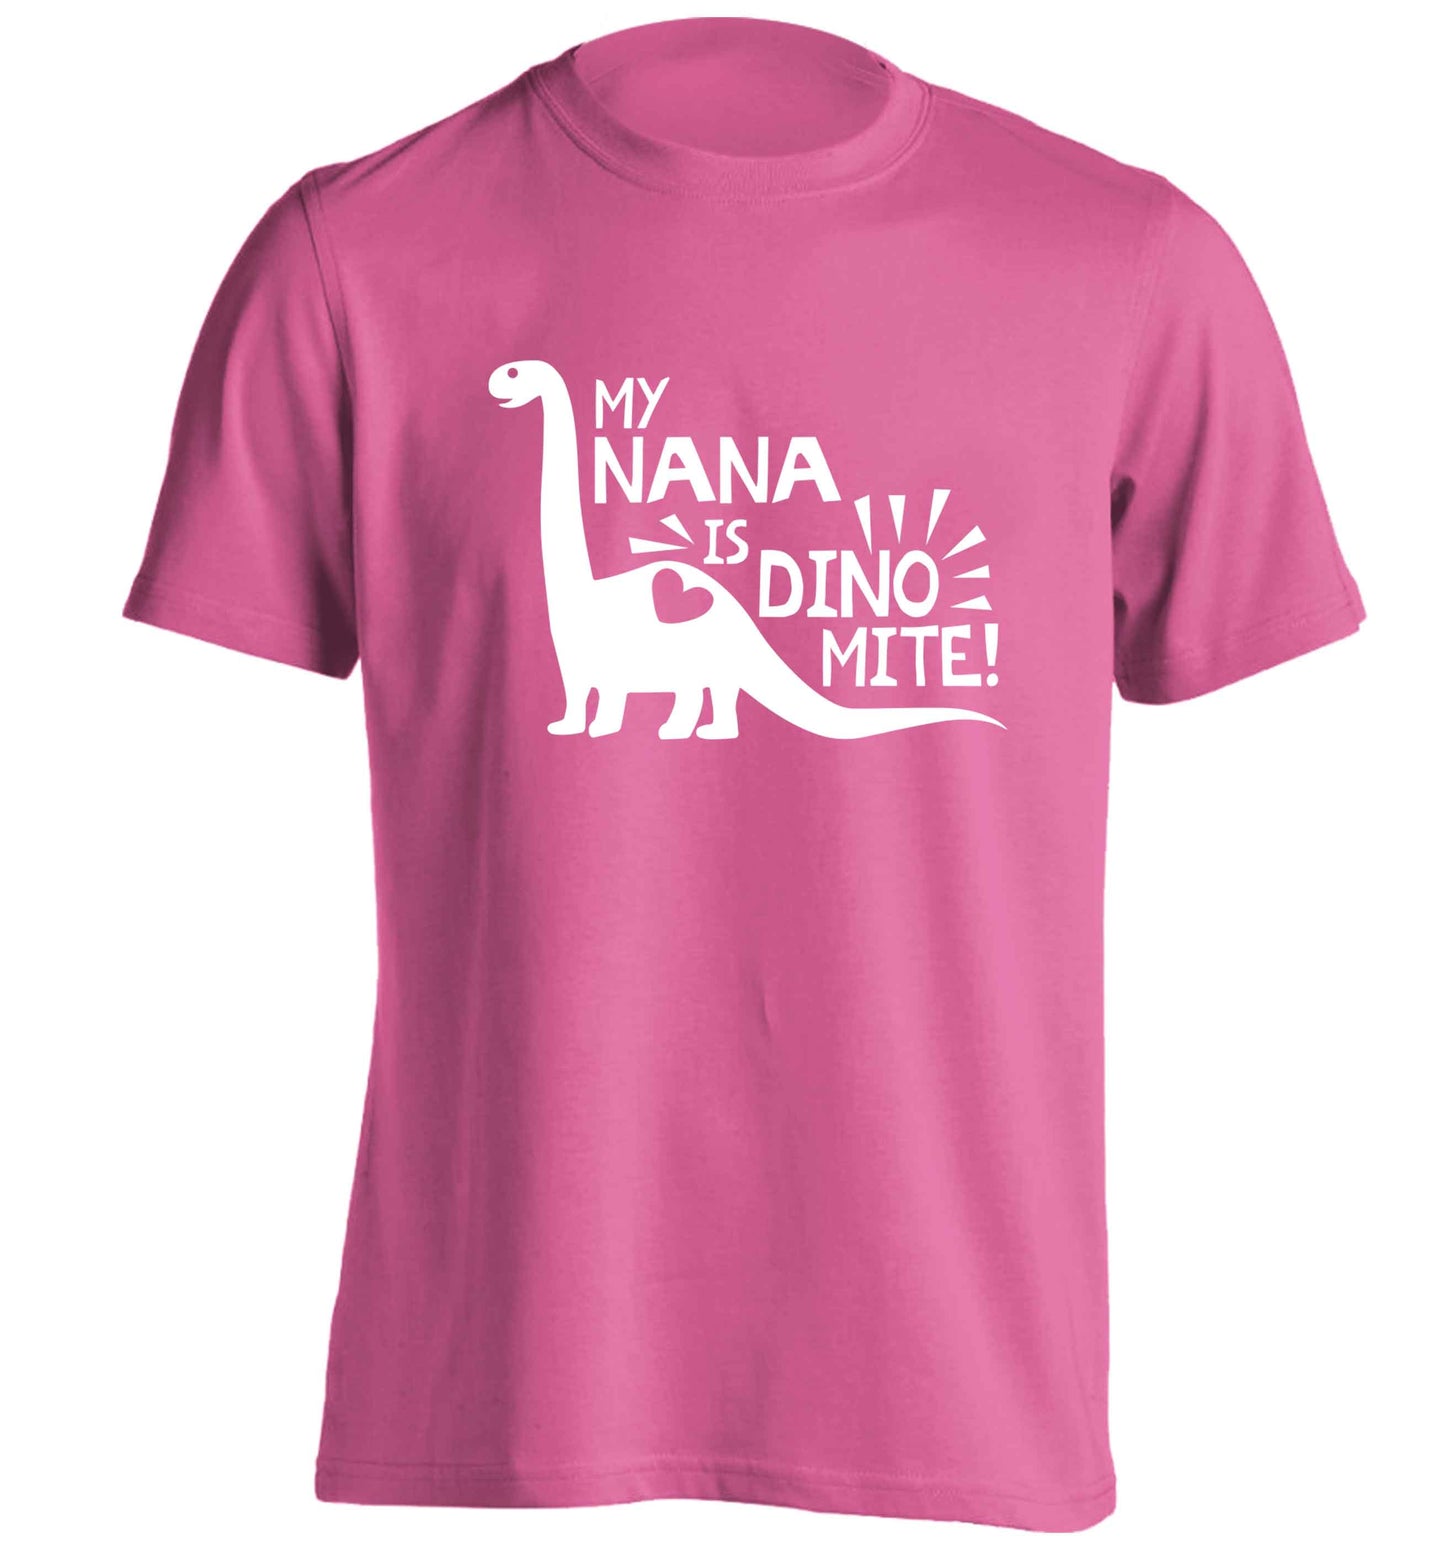 My nana is dinomite! adults unisex pink Tshirt 2XL